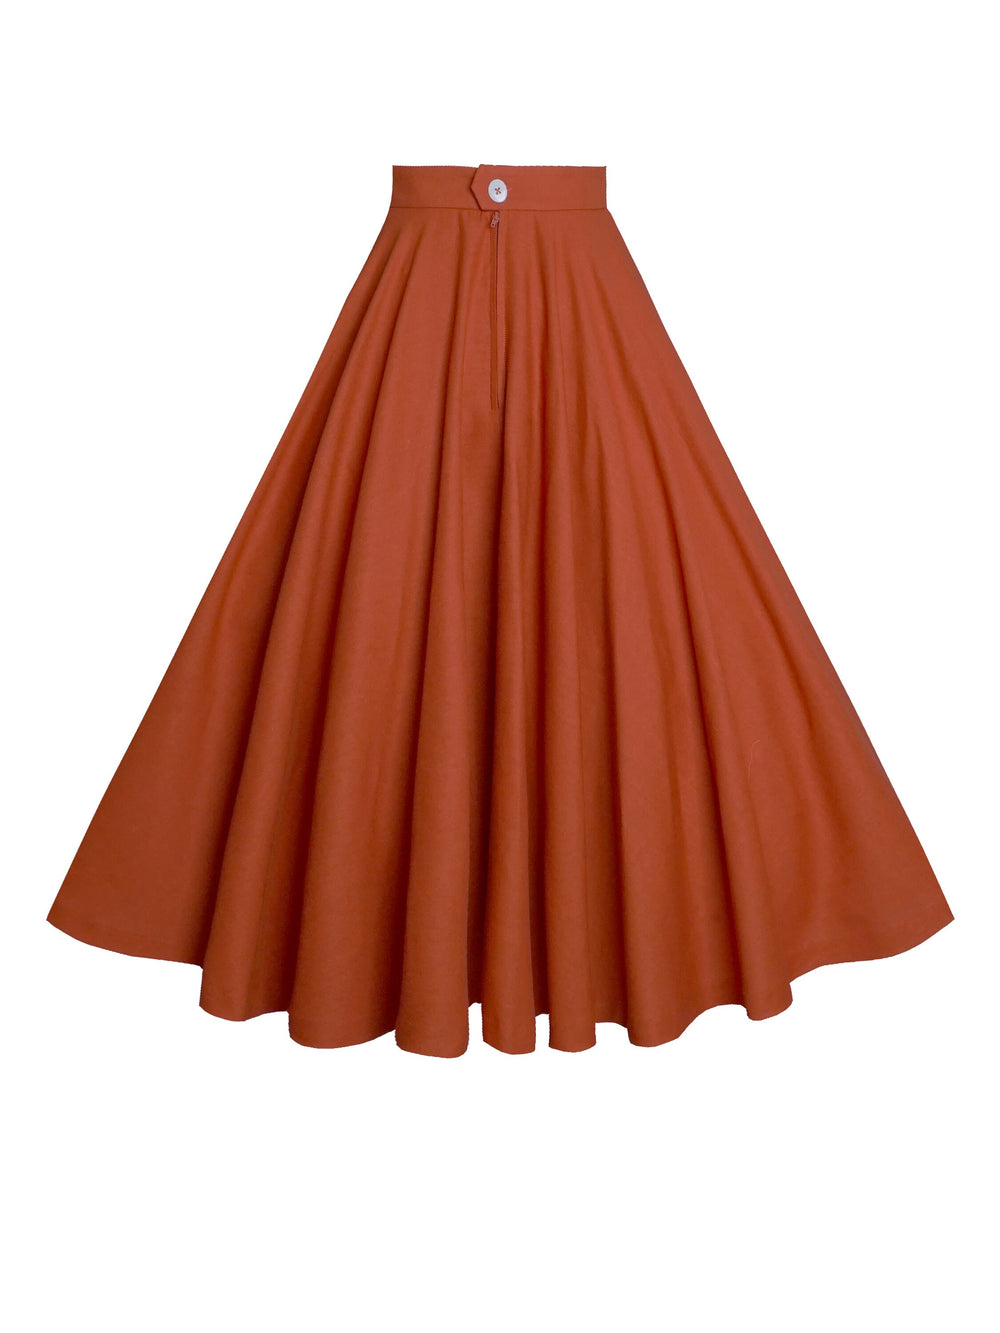 MTO - Lindy Skirt in Redwood Linen